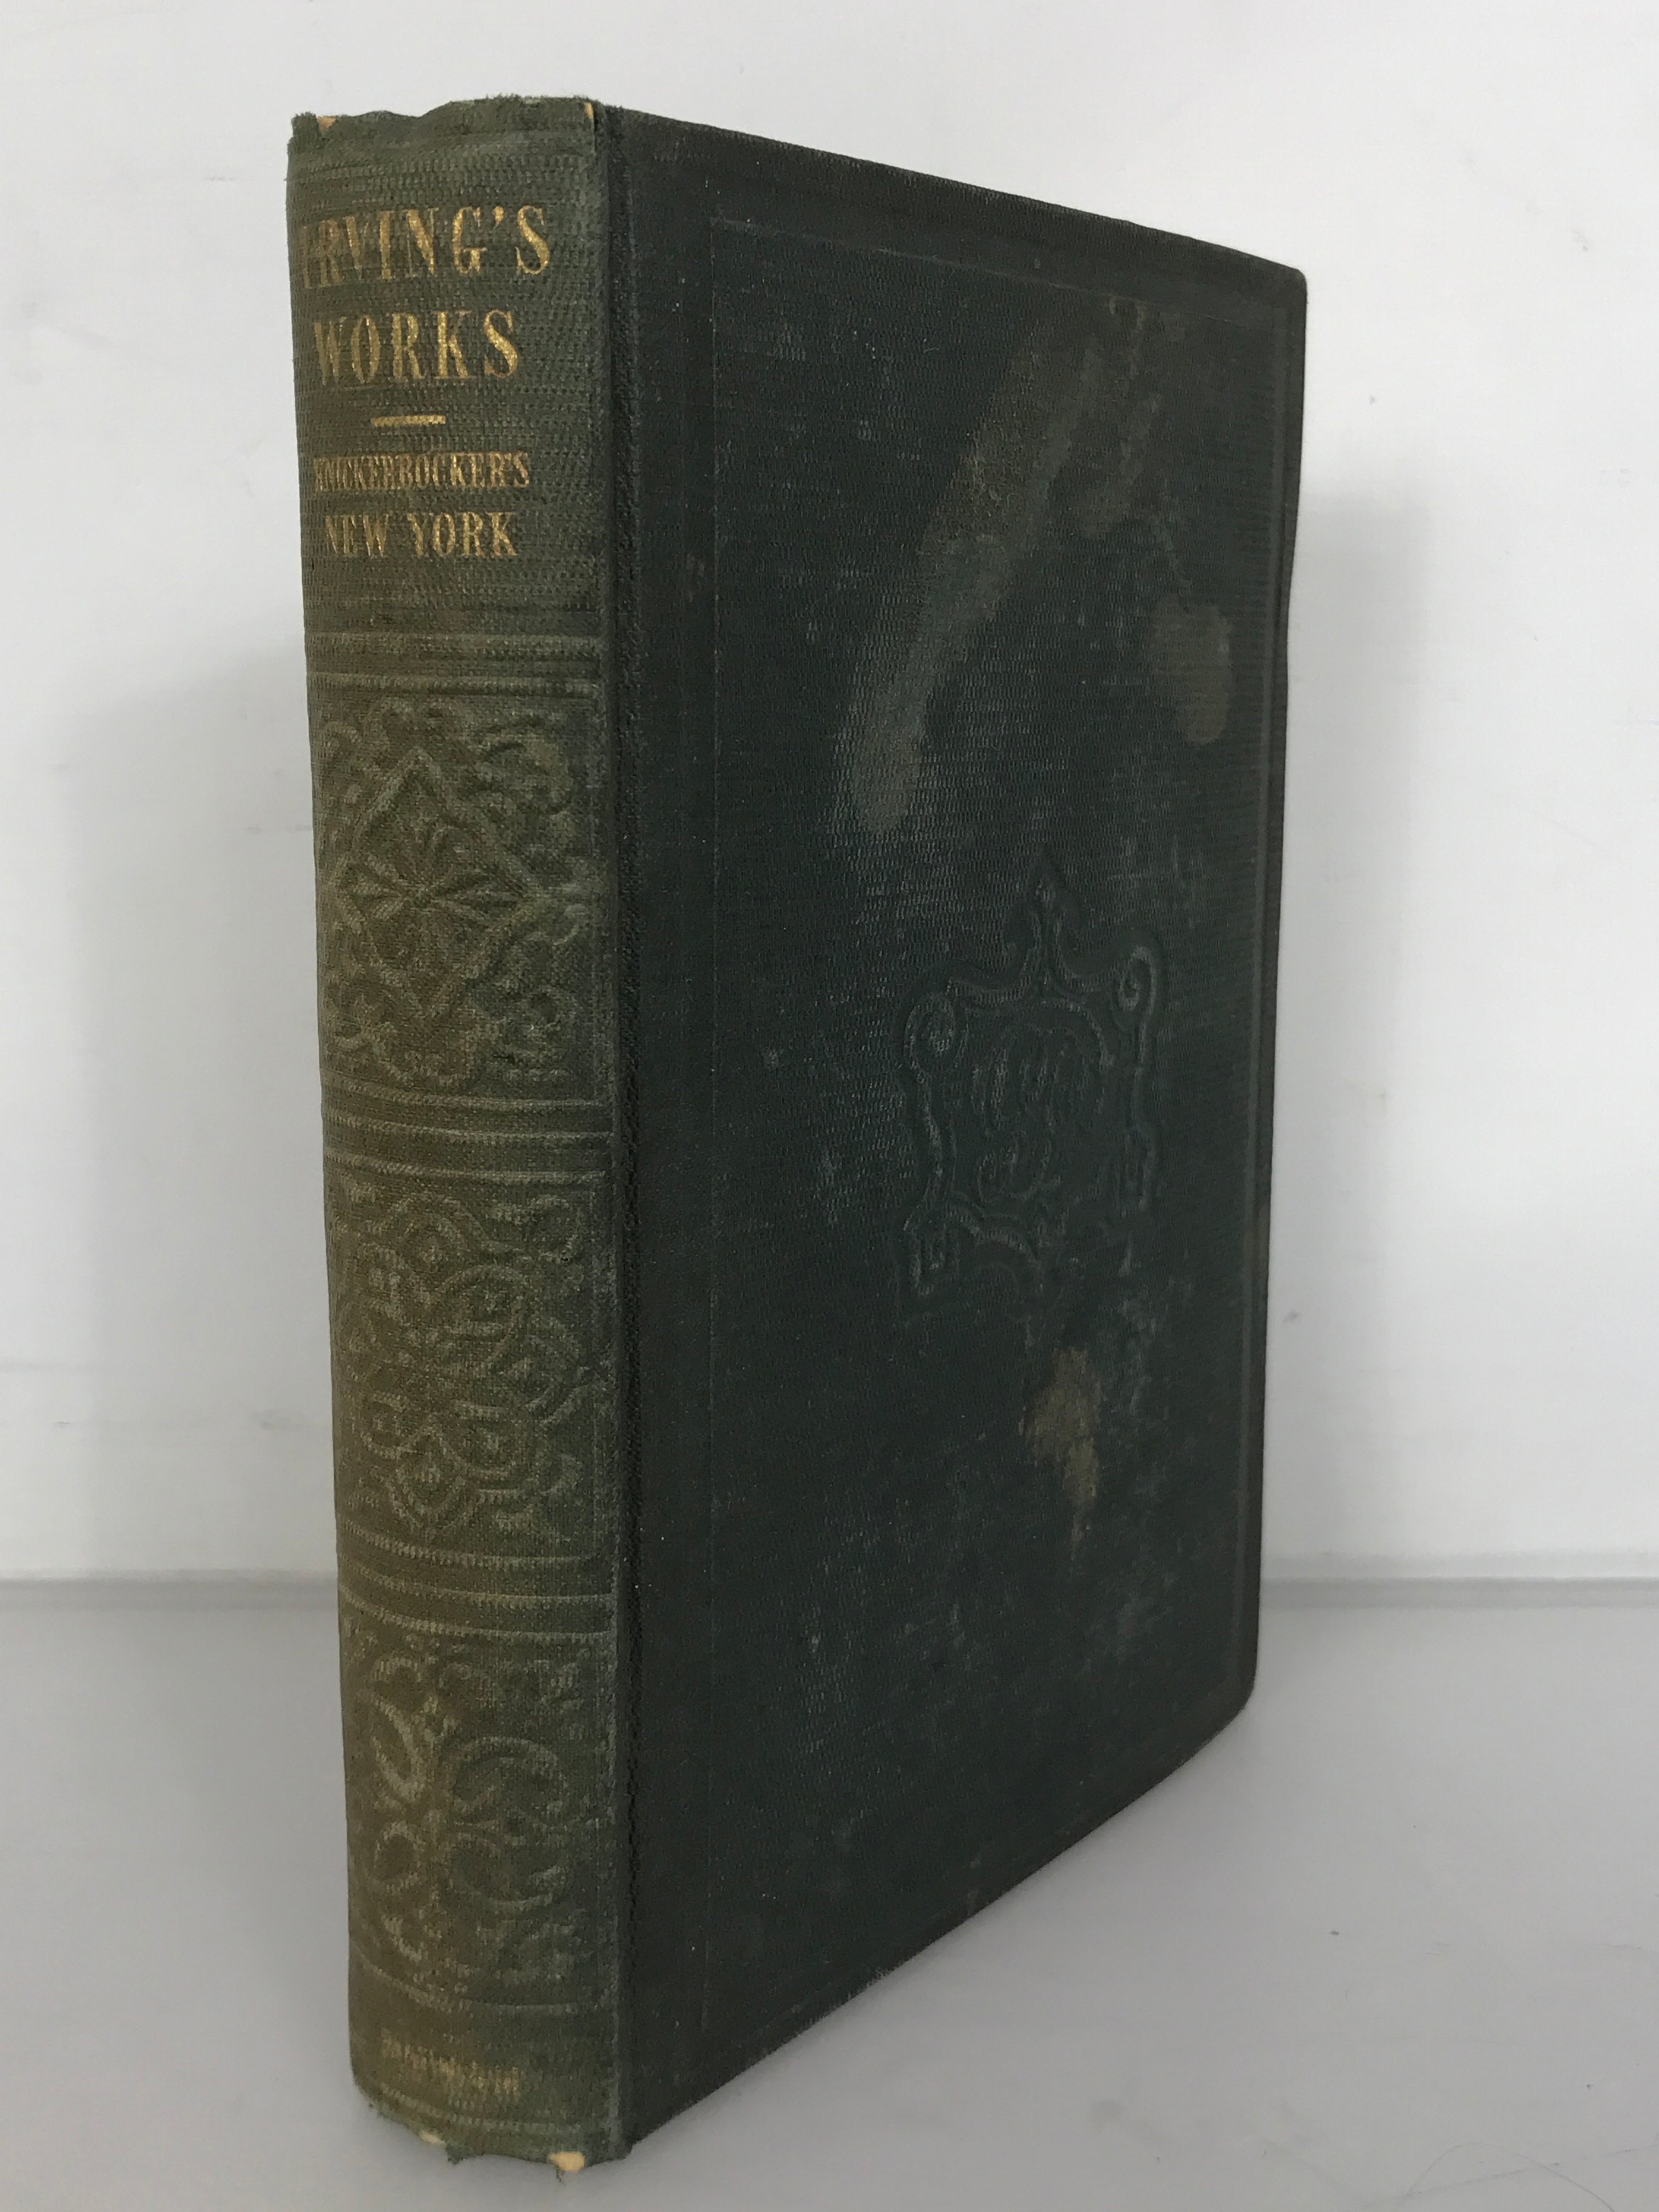 The Works of Washington Irving Vol 1 Knickerbocker's New York 1849 HC